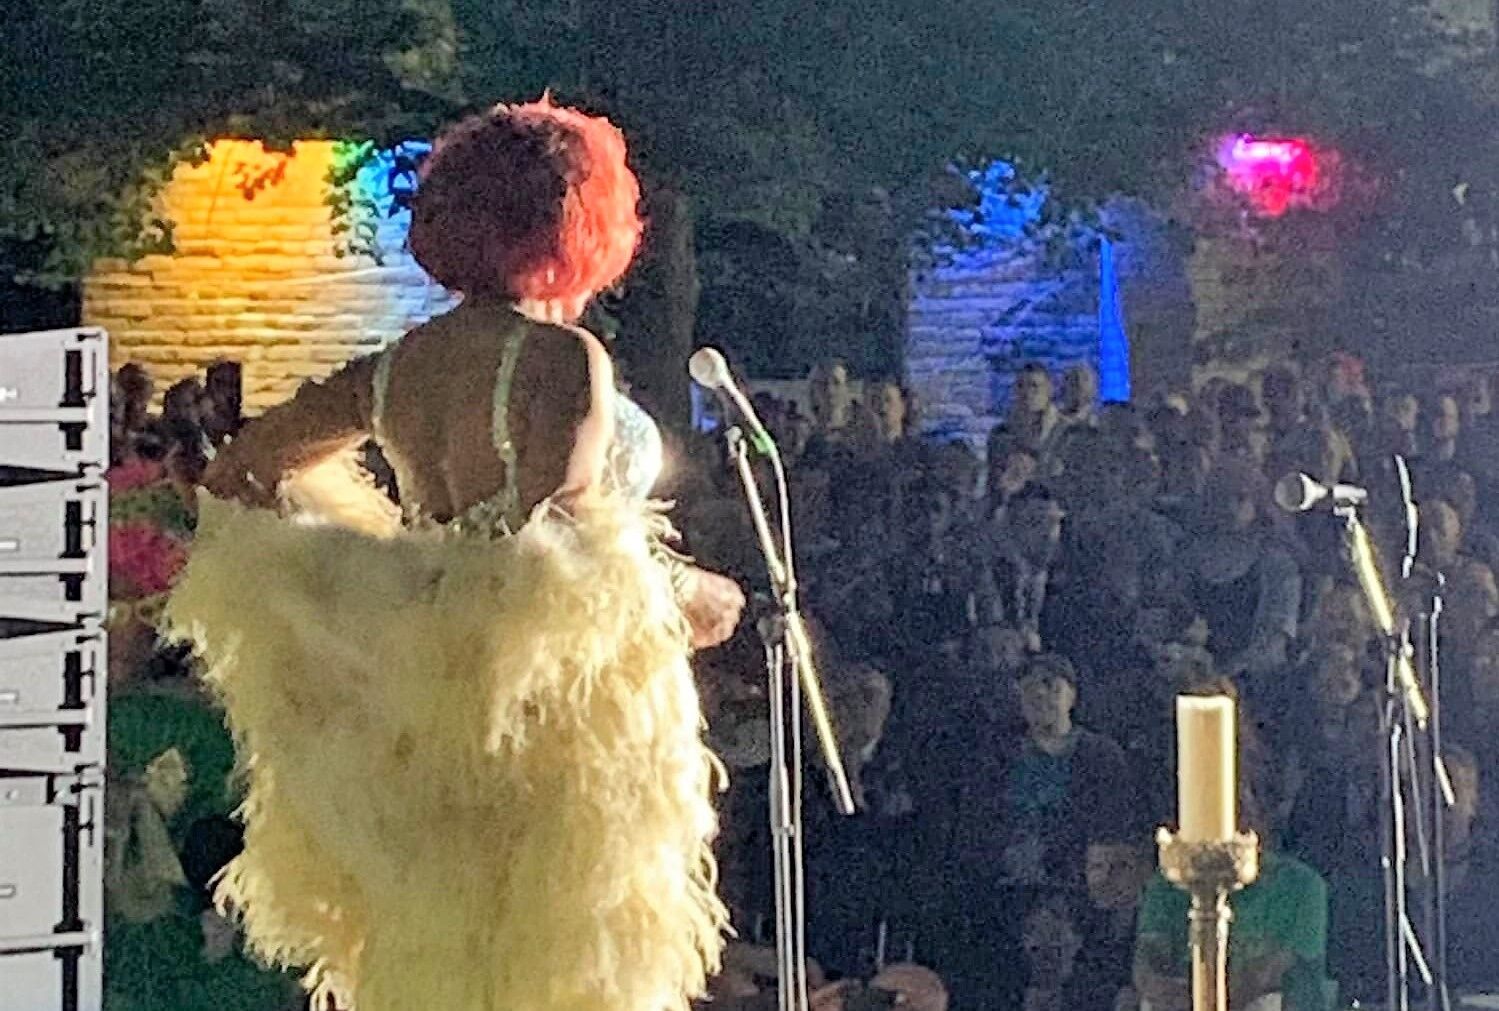 Jade Elektra performs at the Toronto AIDS Vigil on June 18, 2019.